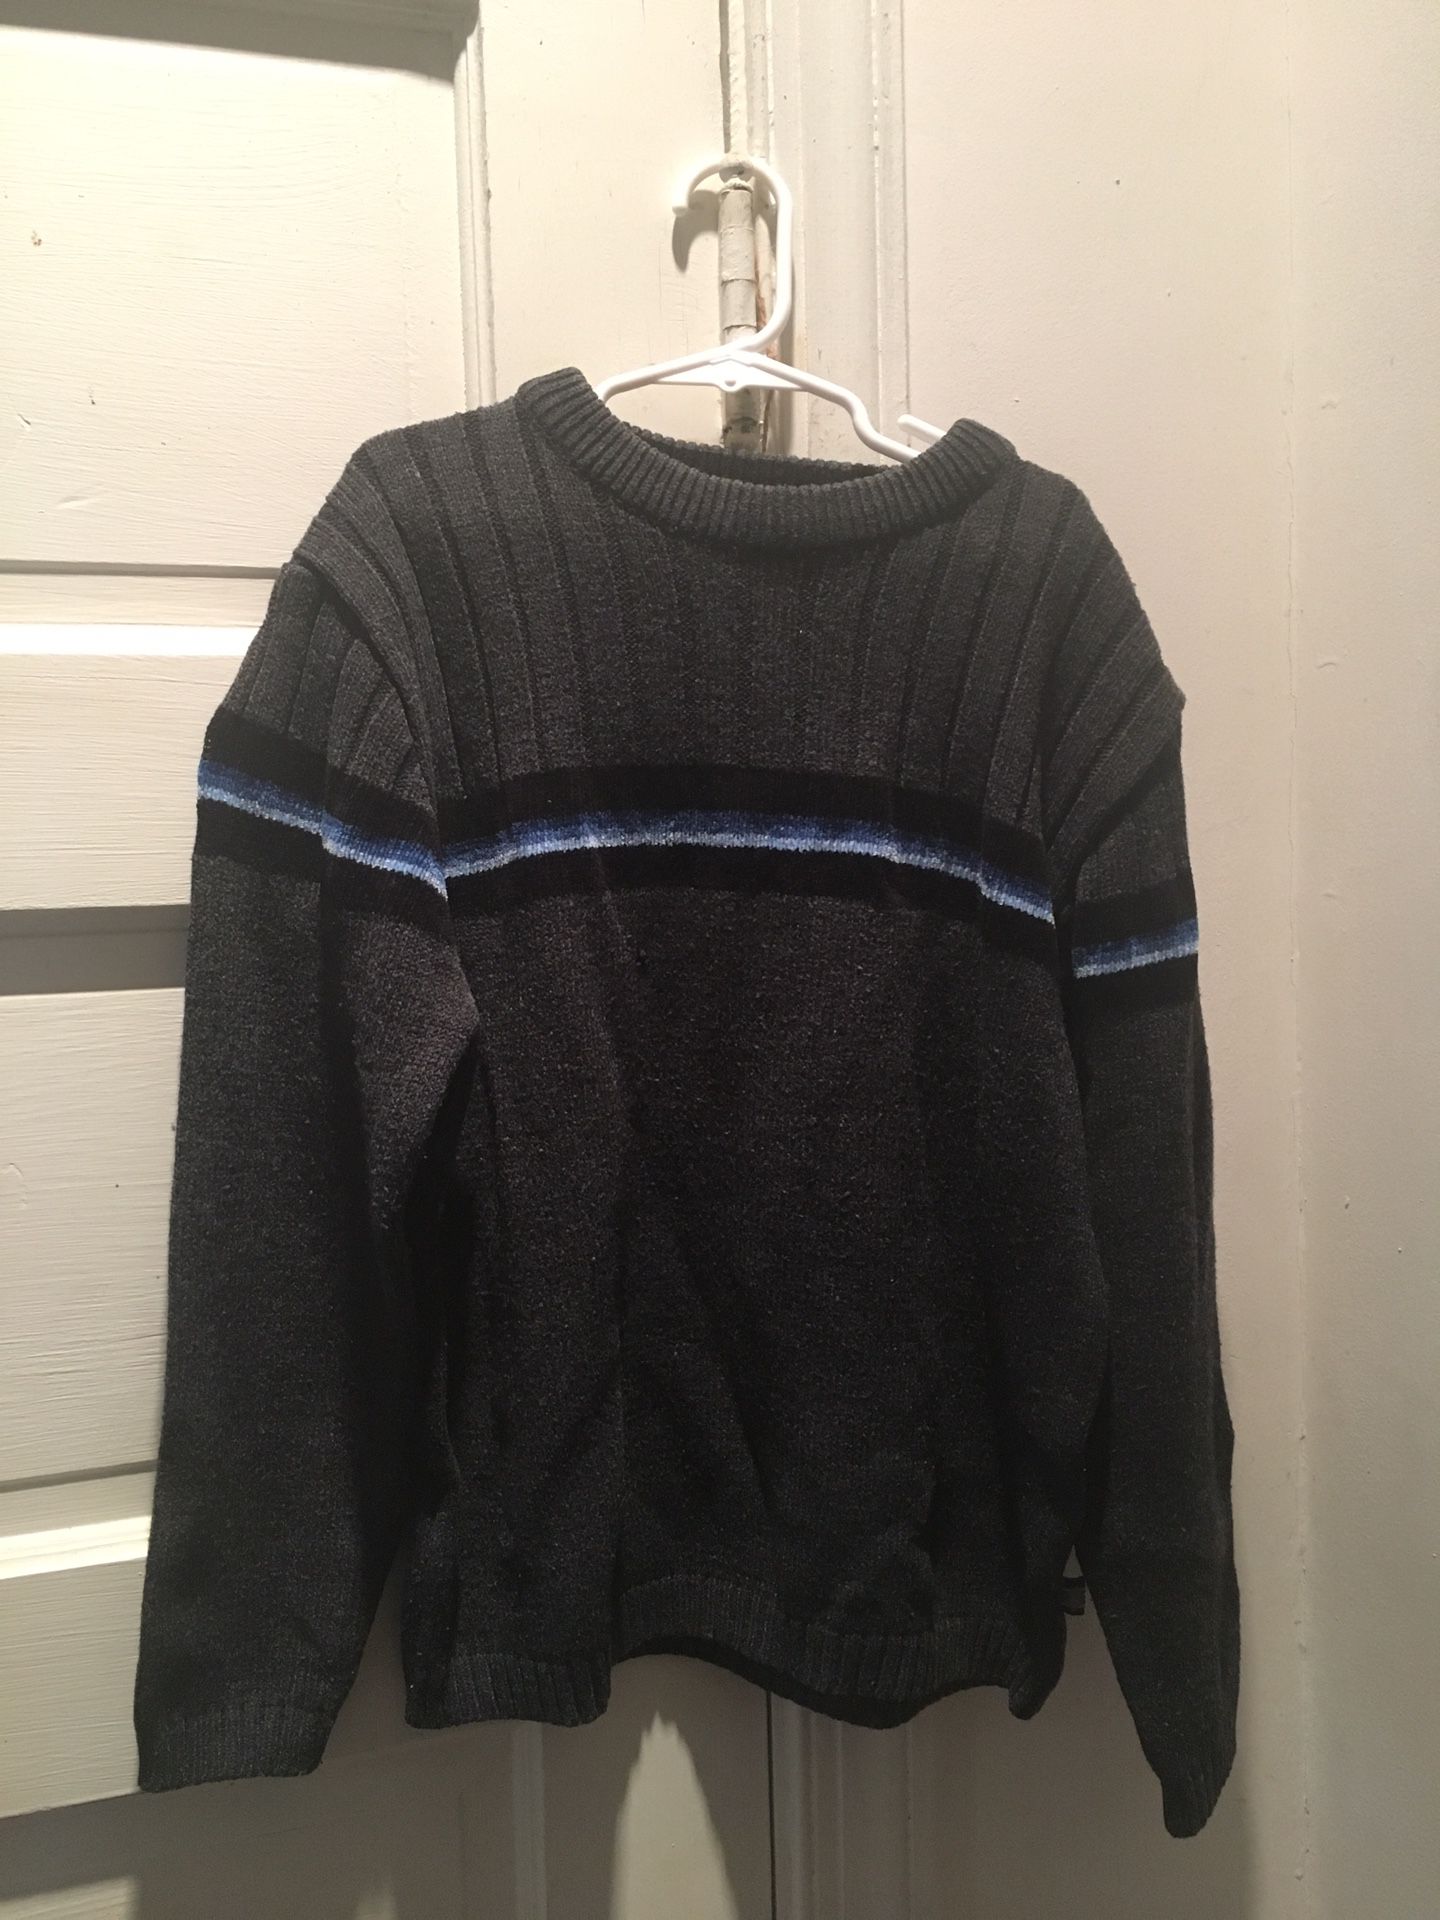 Sweater child size Small 8-10